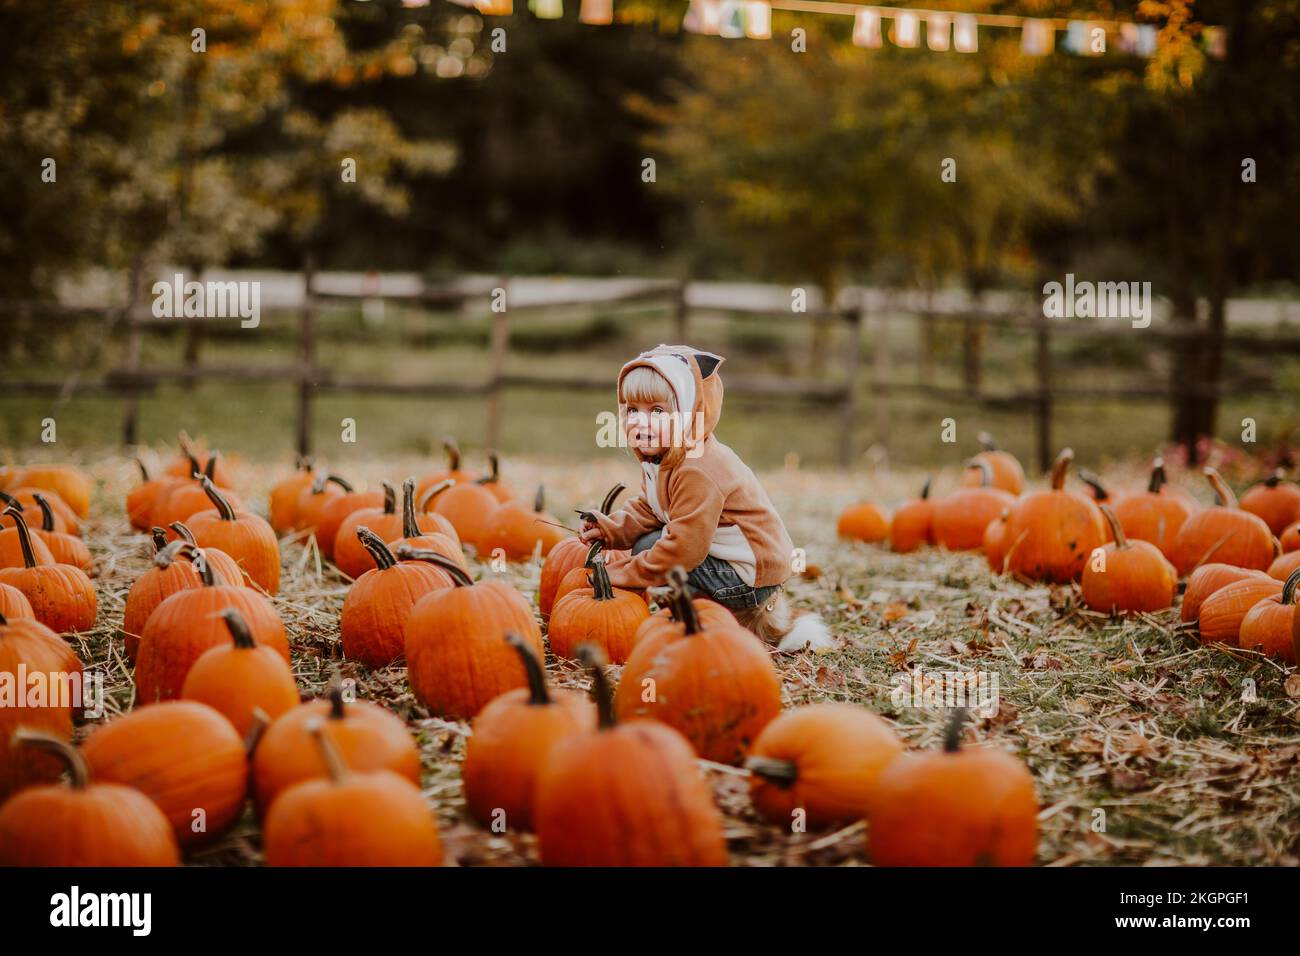 Cute girl wearing fox costume crouching by pumpkins on field Stock Photo